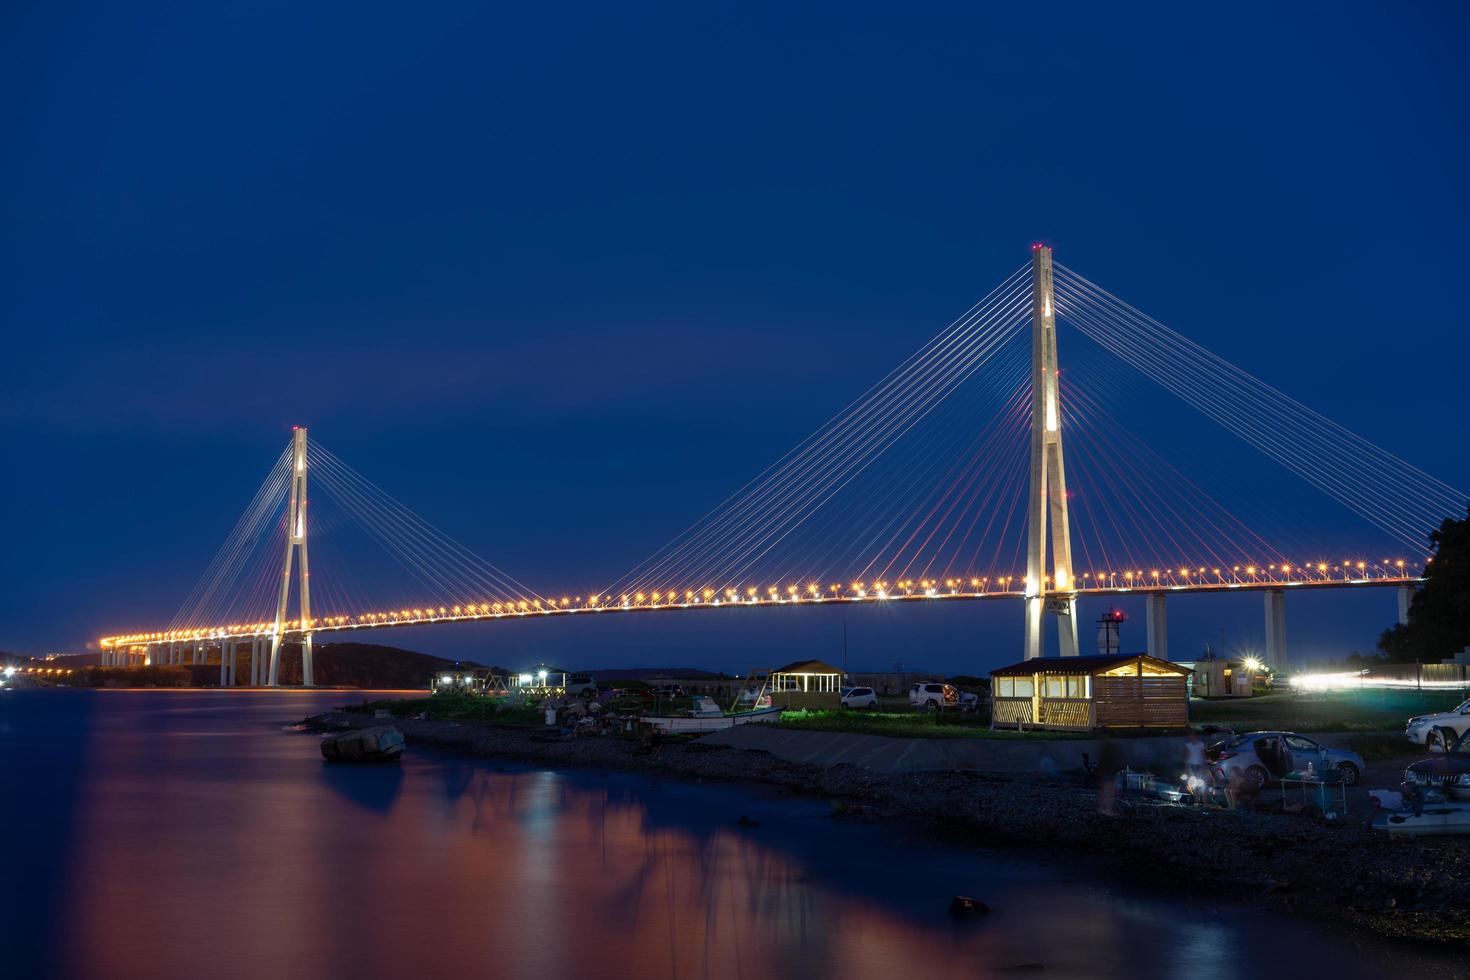 vladivostok, rússia. paisagem noturna com vista para a ponte russa. foto